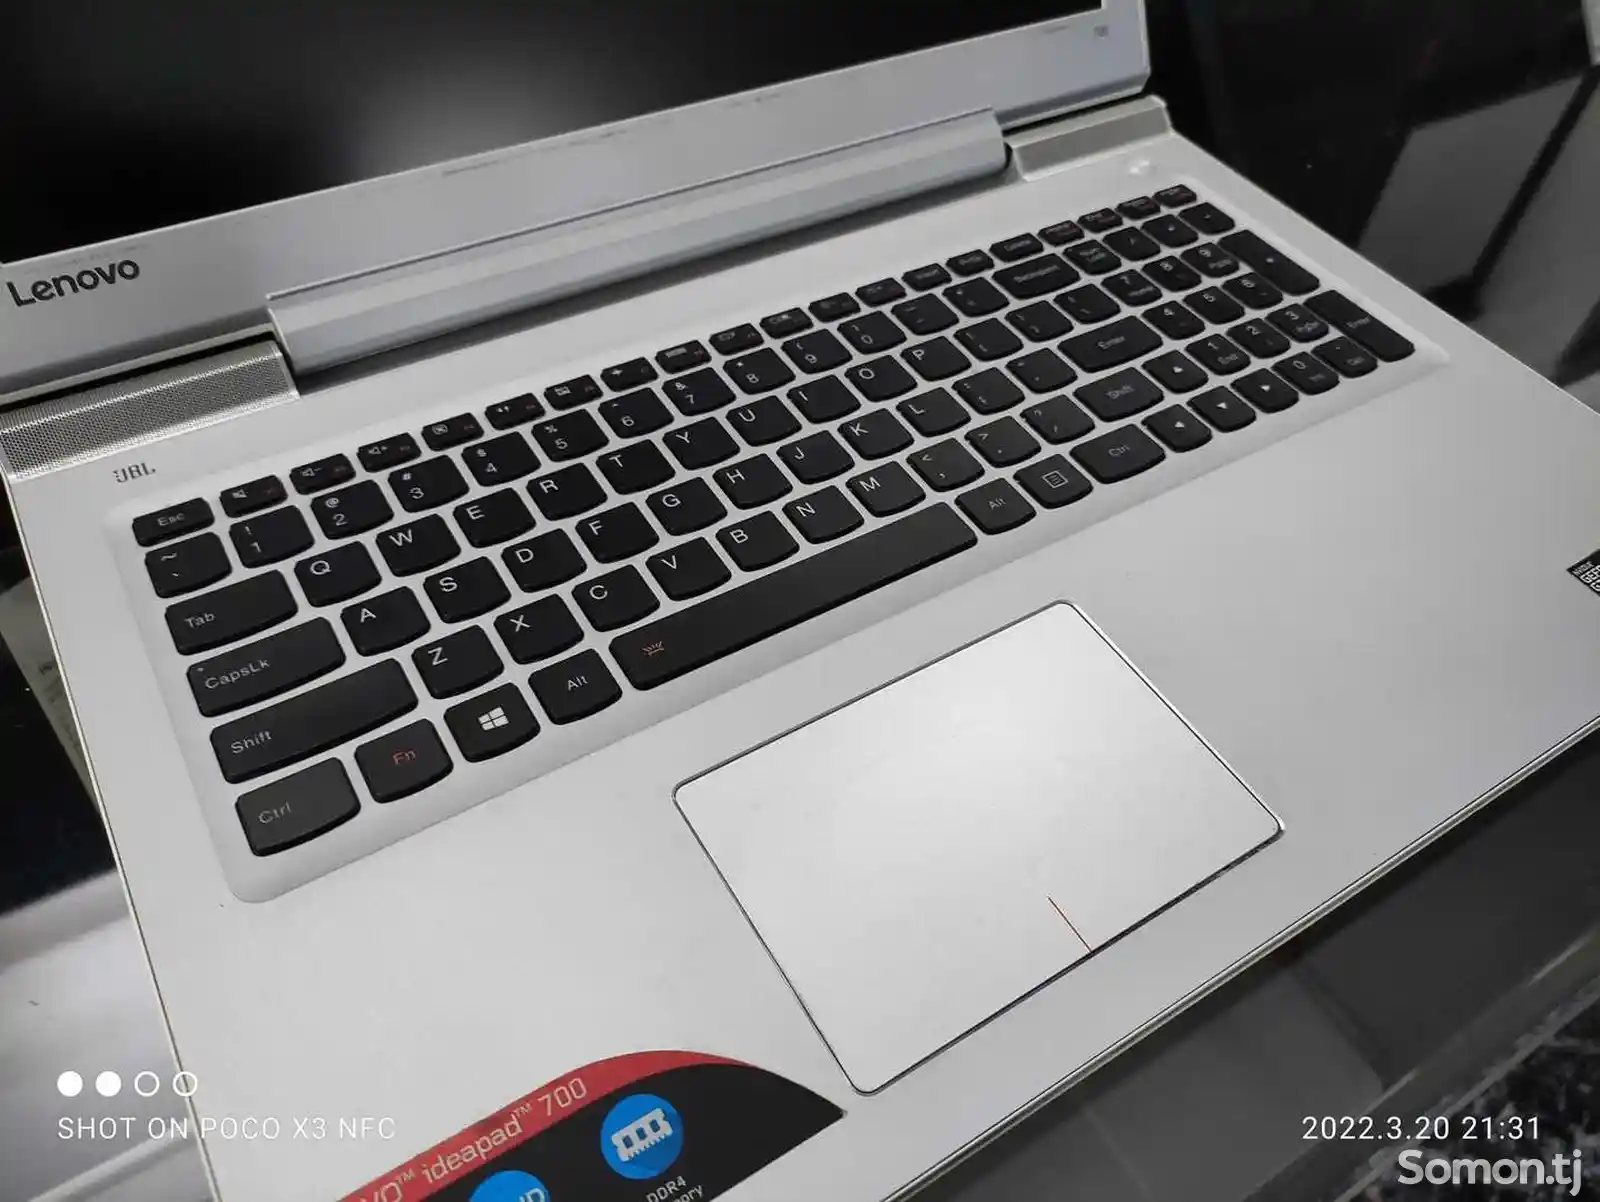 Игровой Ноутбук Lenovo Ideapad 700 Core i7-6700HQ GTX 950M 2GB-6